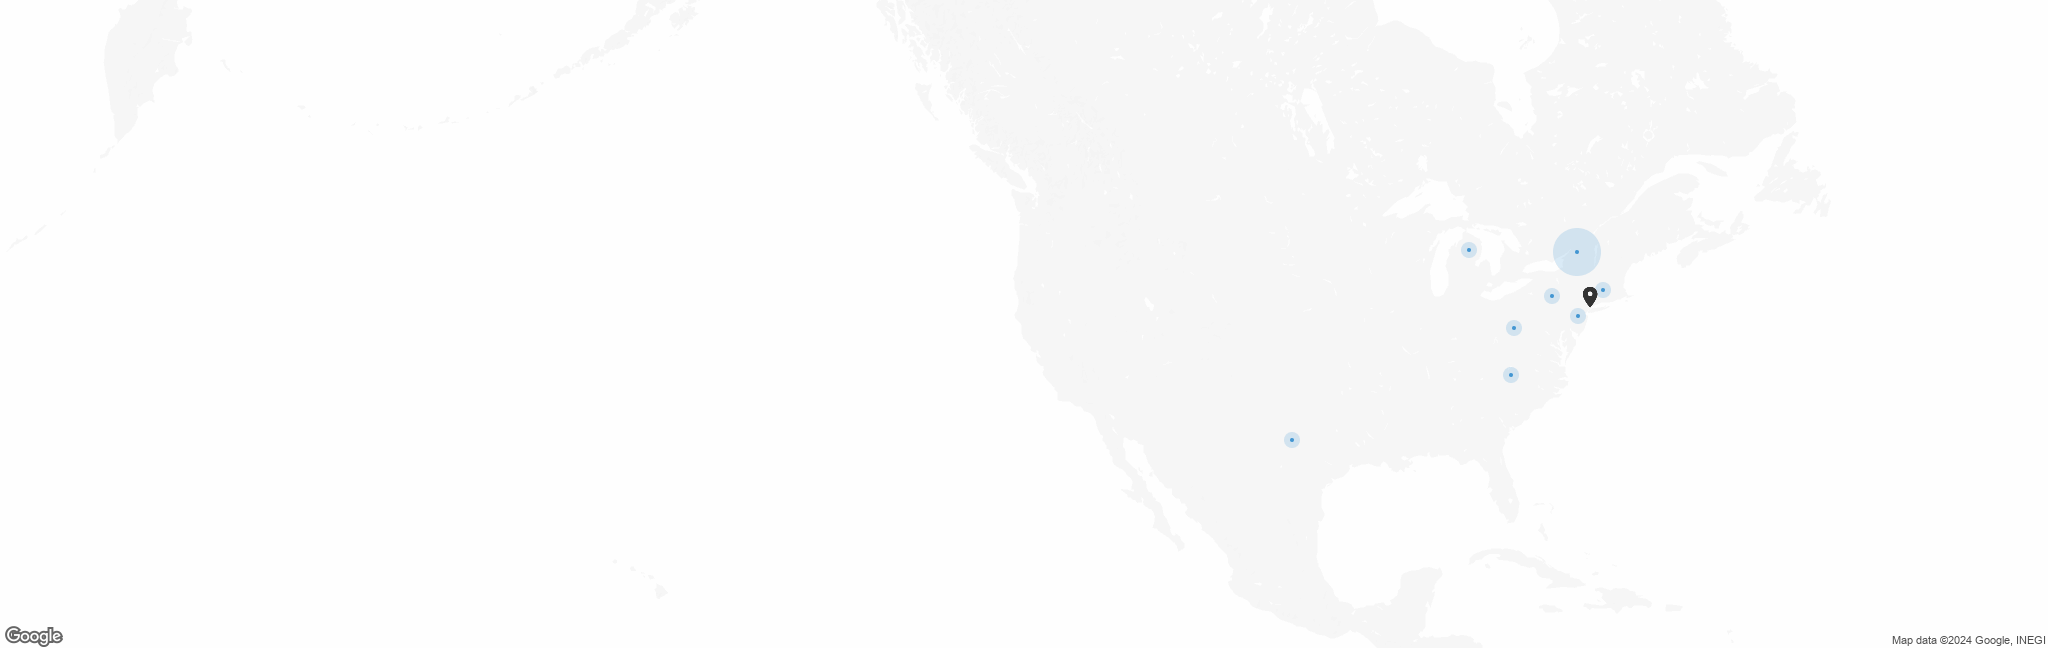 Map of US with pin of The Thinkubator, Inc. (The Thinkubator, Inc.) location